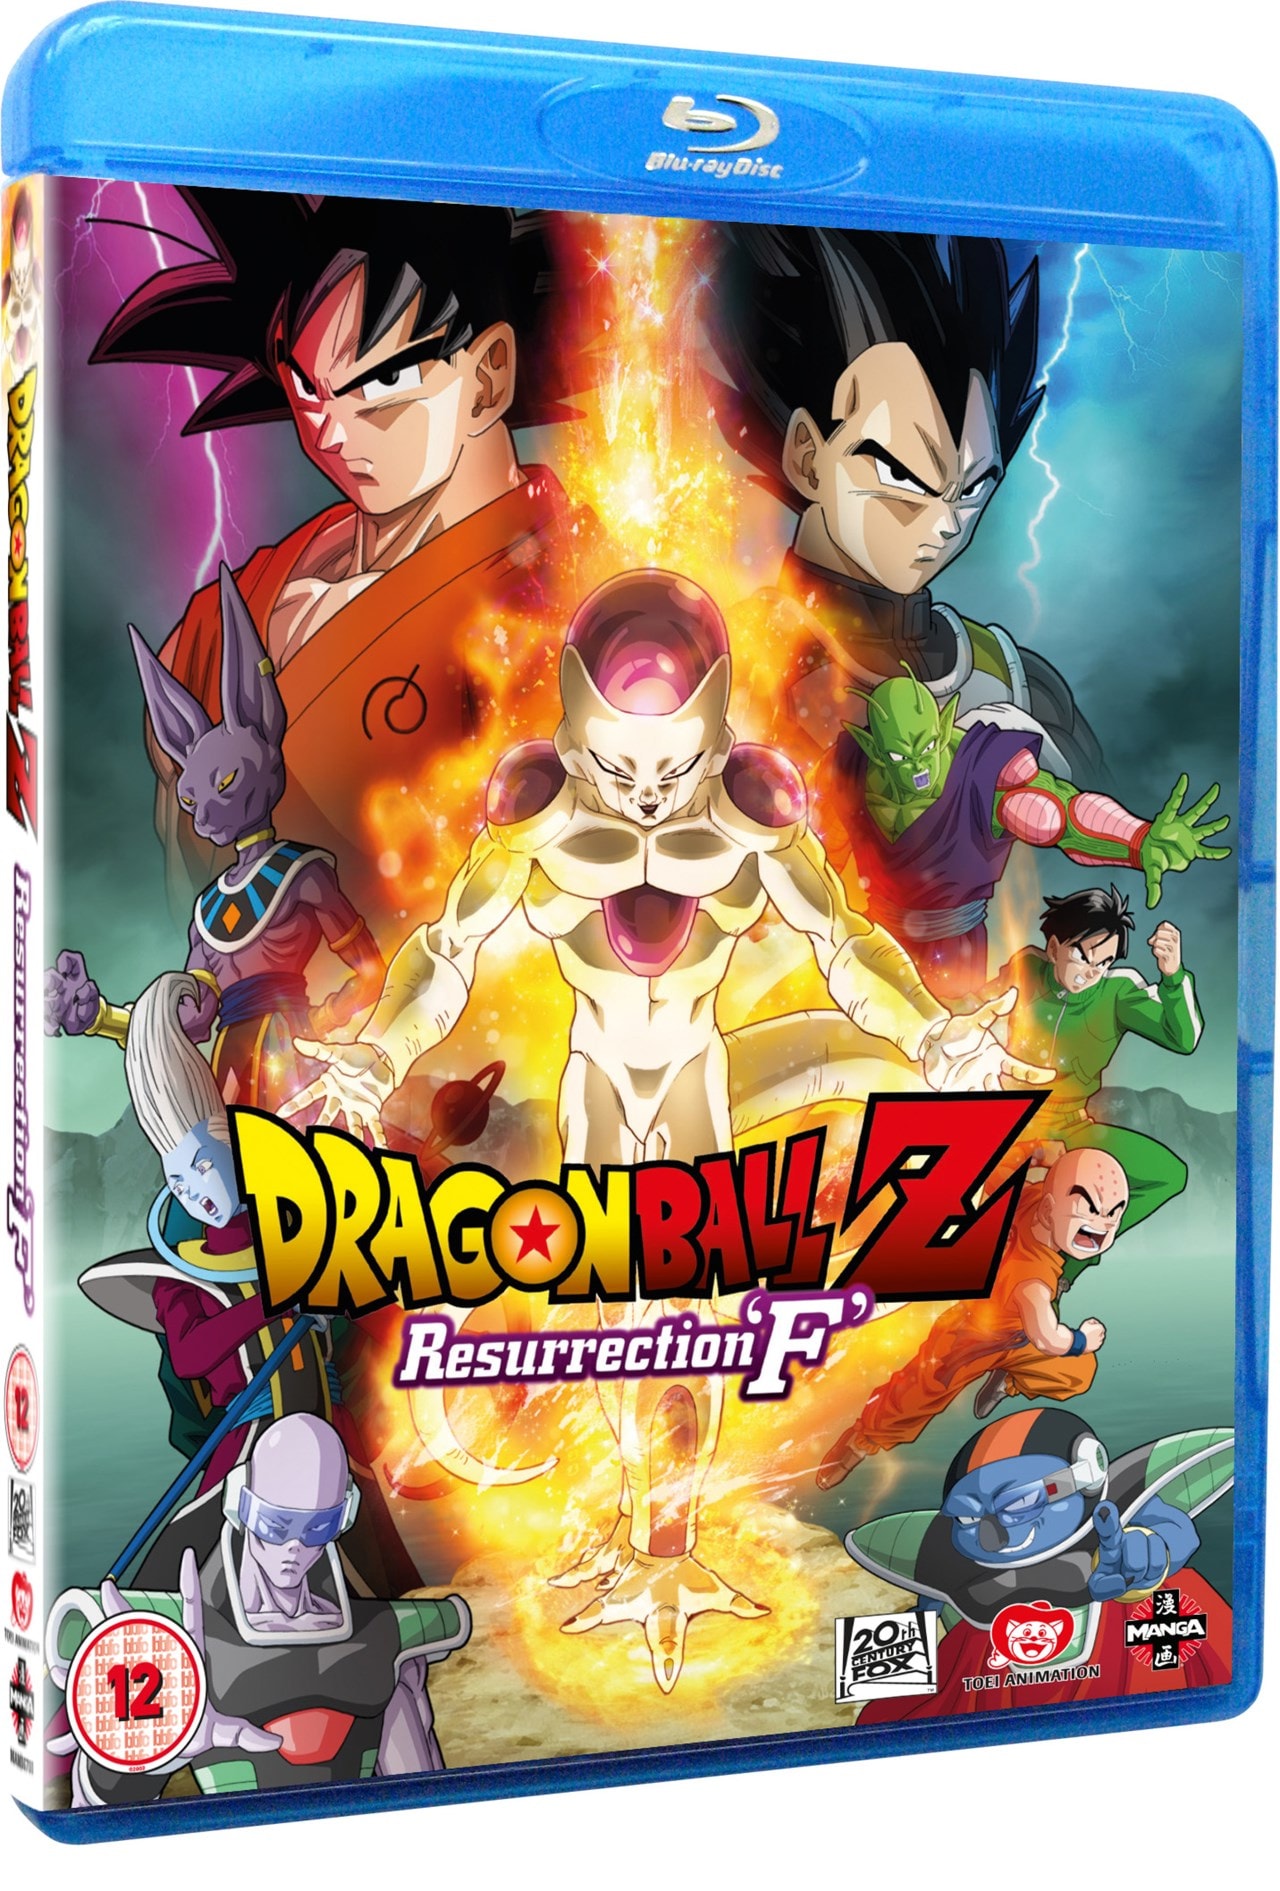 Dragon Ball Z Resurrection F Blu Ray Free Shipping Over 20 Hmv Store